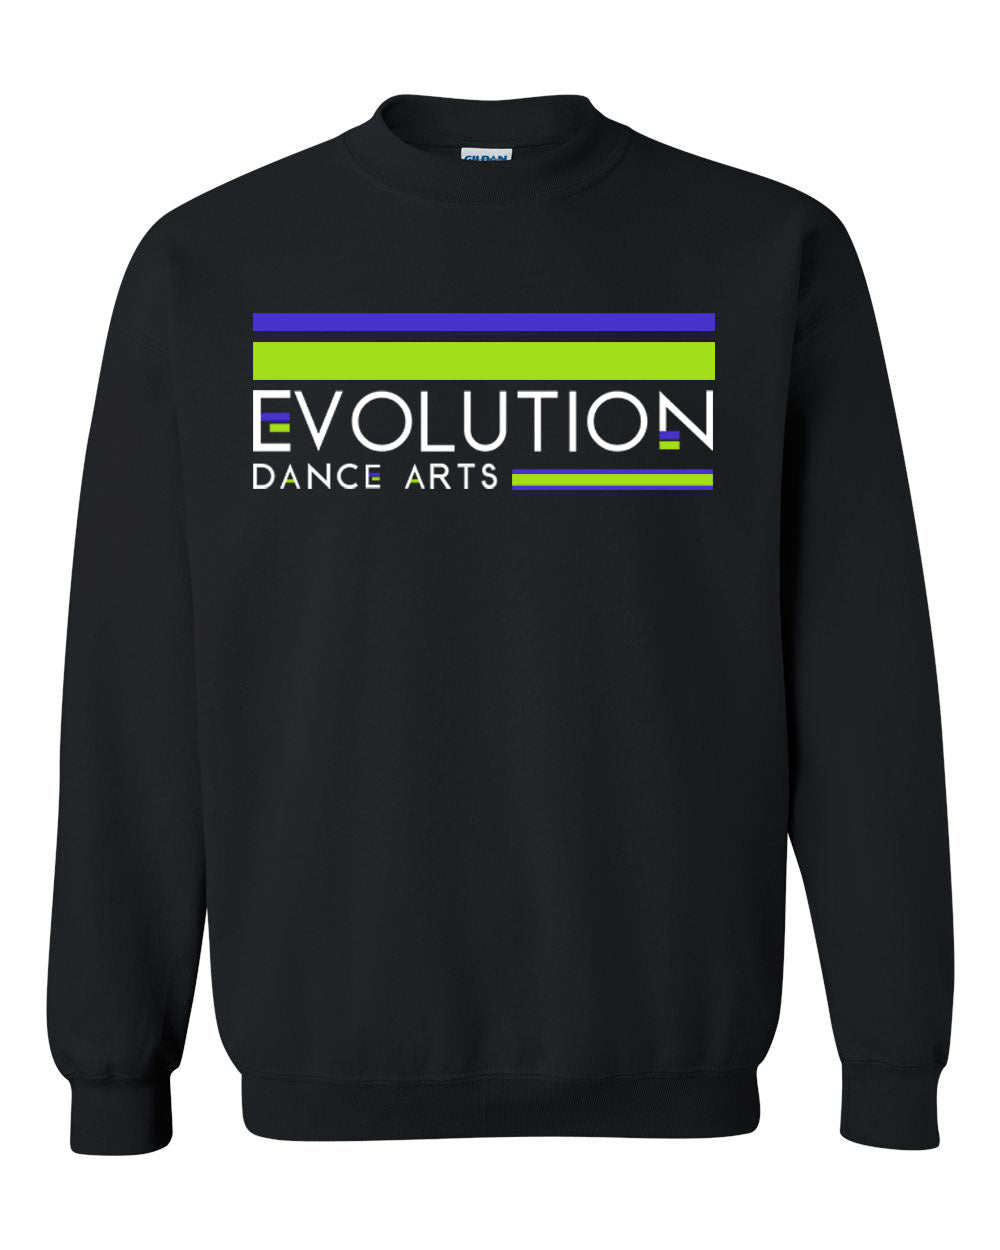 Evolution Dance Arts Design 3 non hooded sweatshirt